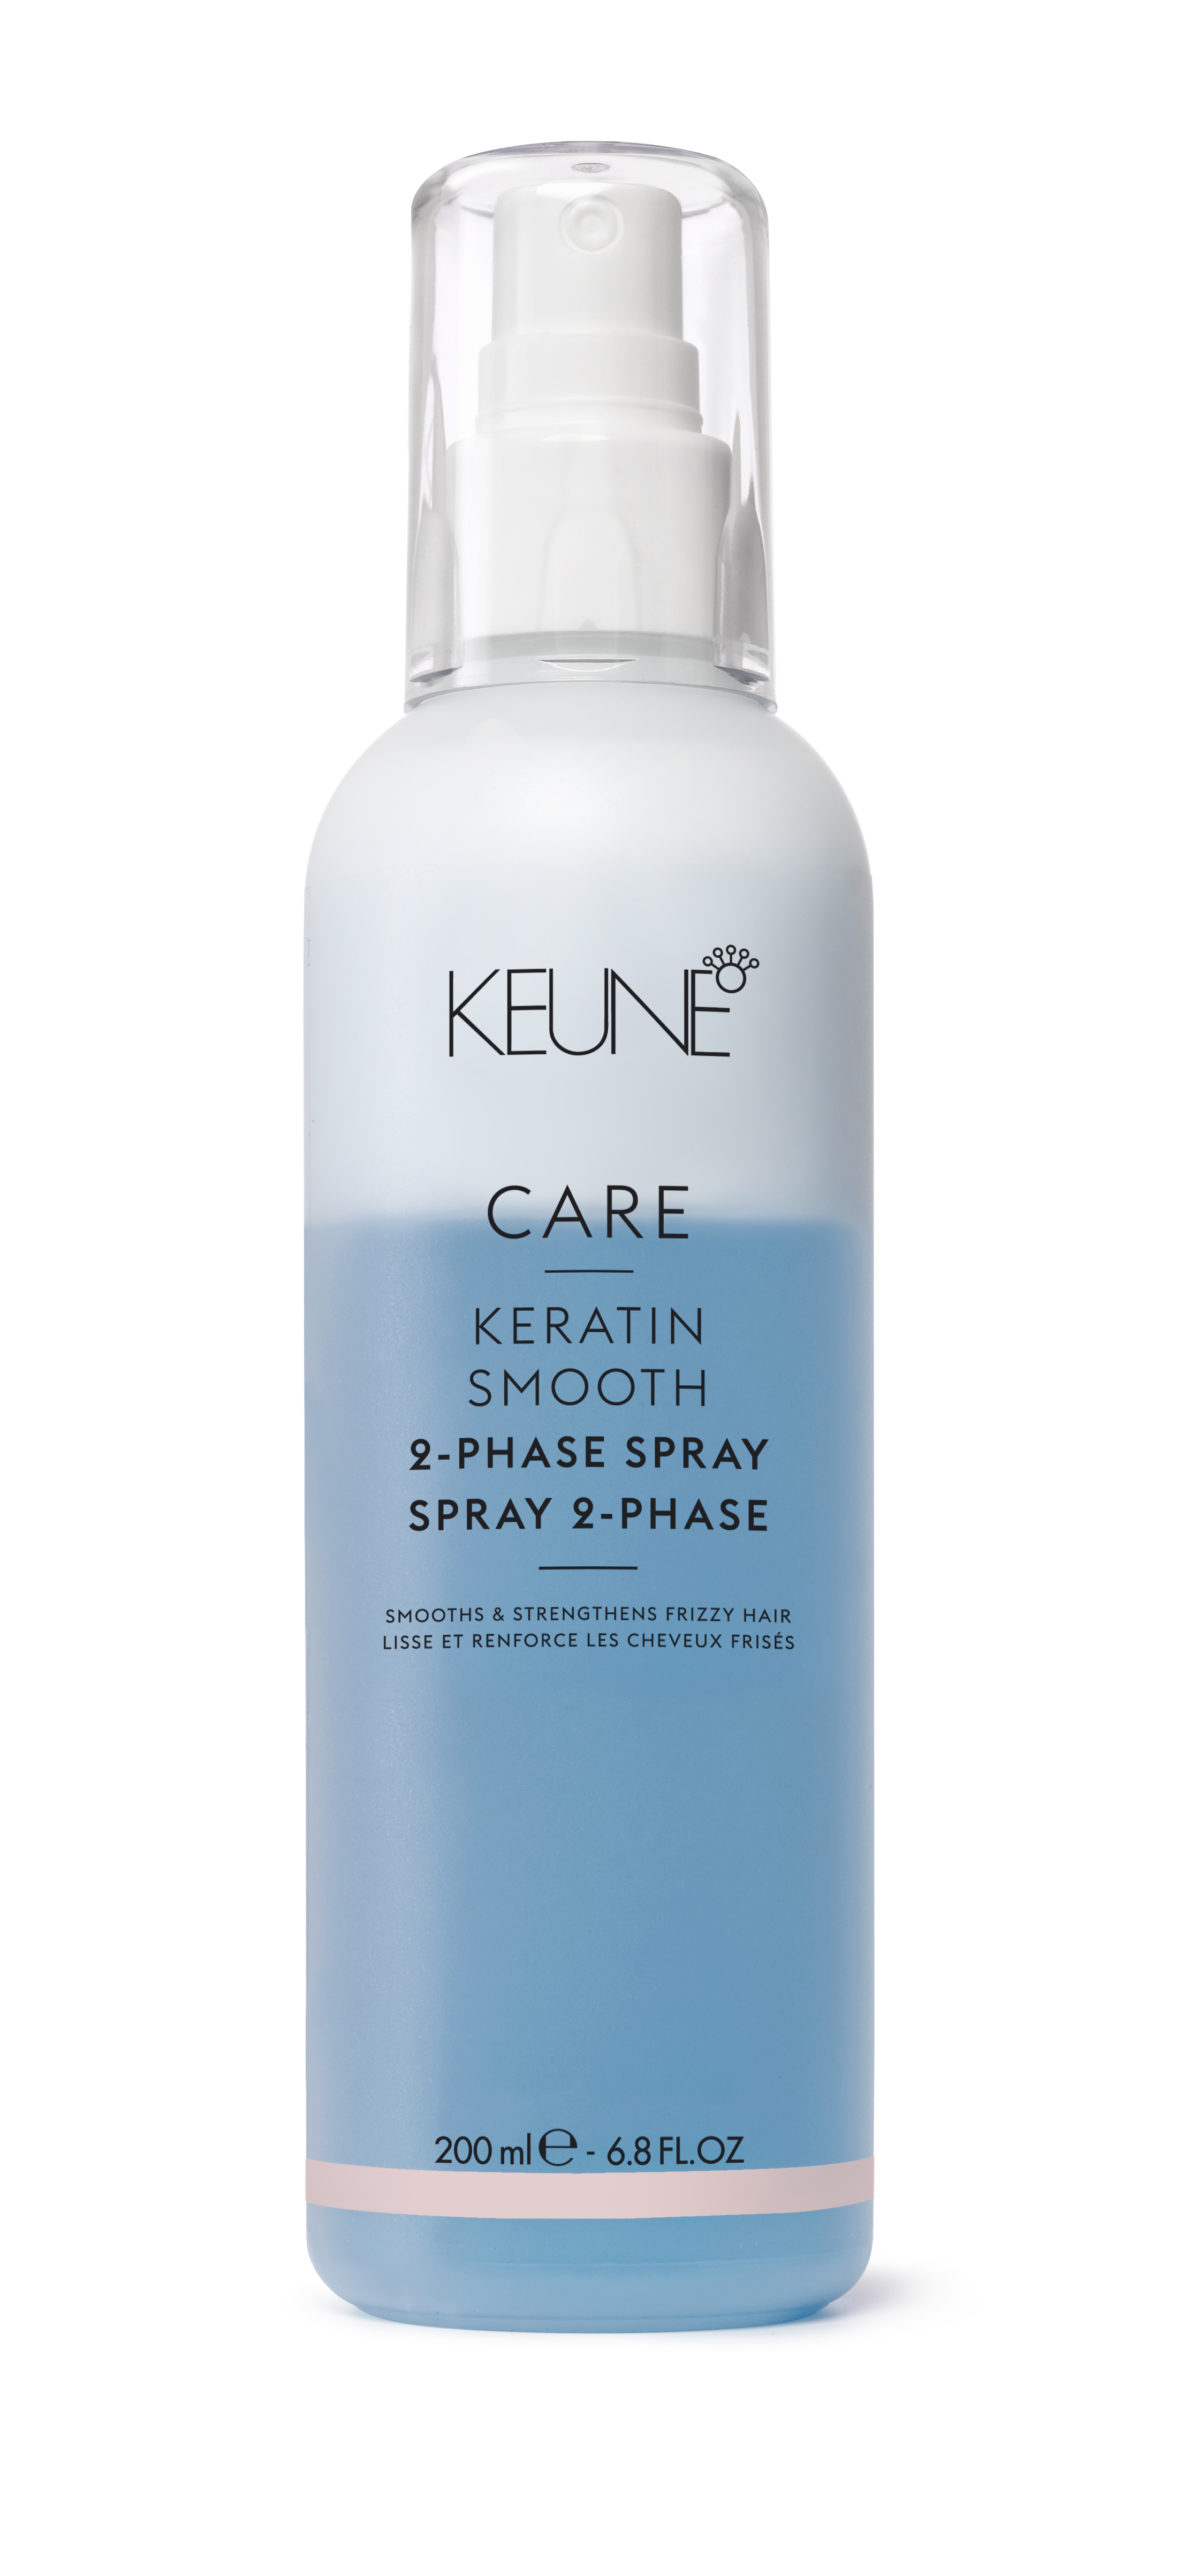 Care-keratin-smooth-2-phase-spray-nieuw-highres